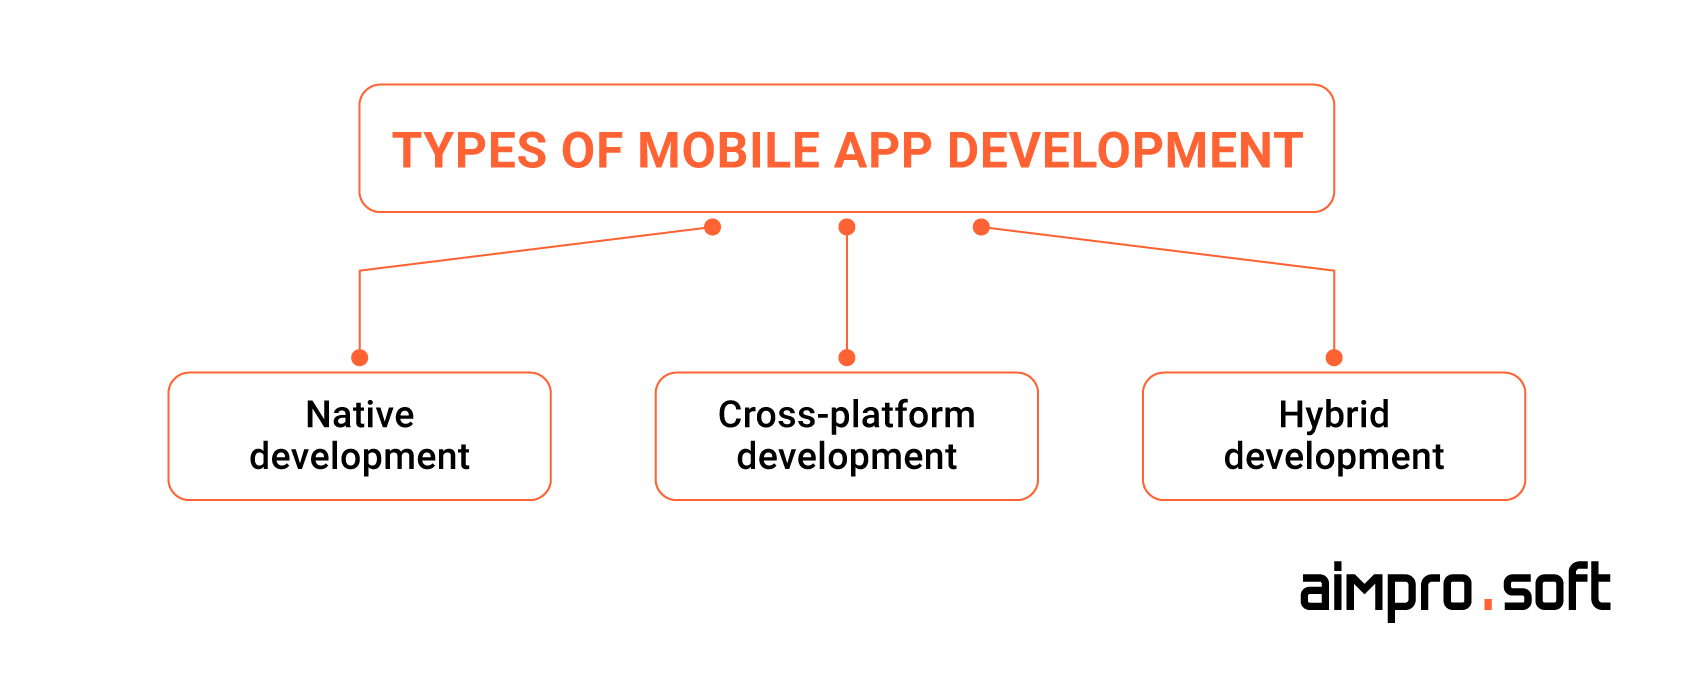 Types of mobile app development